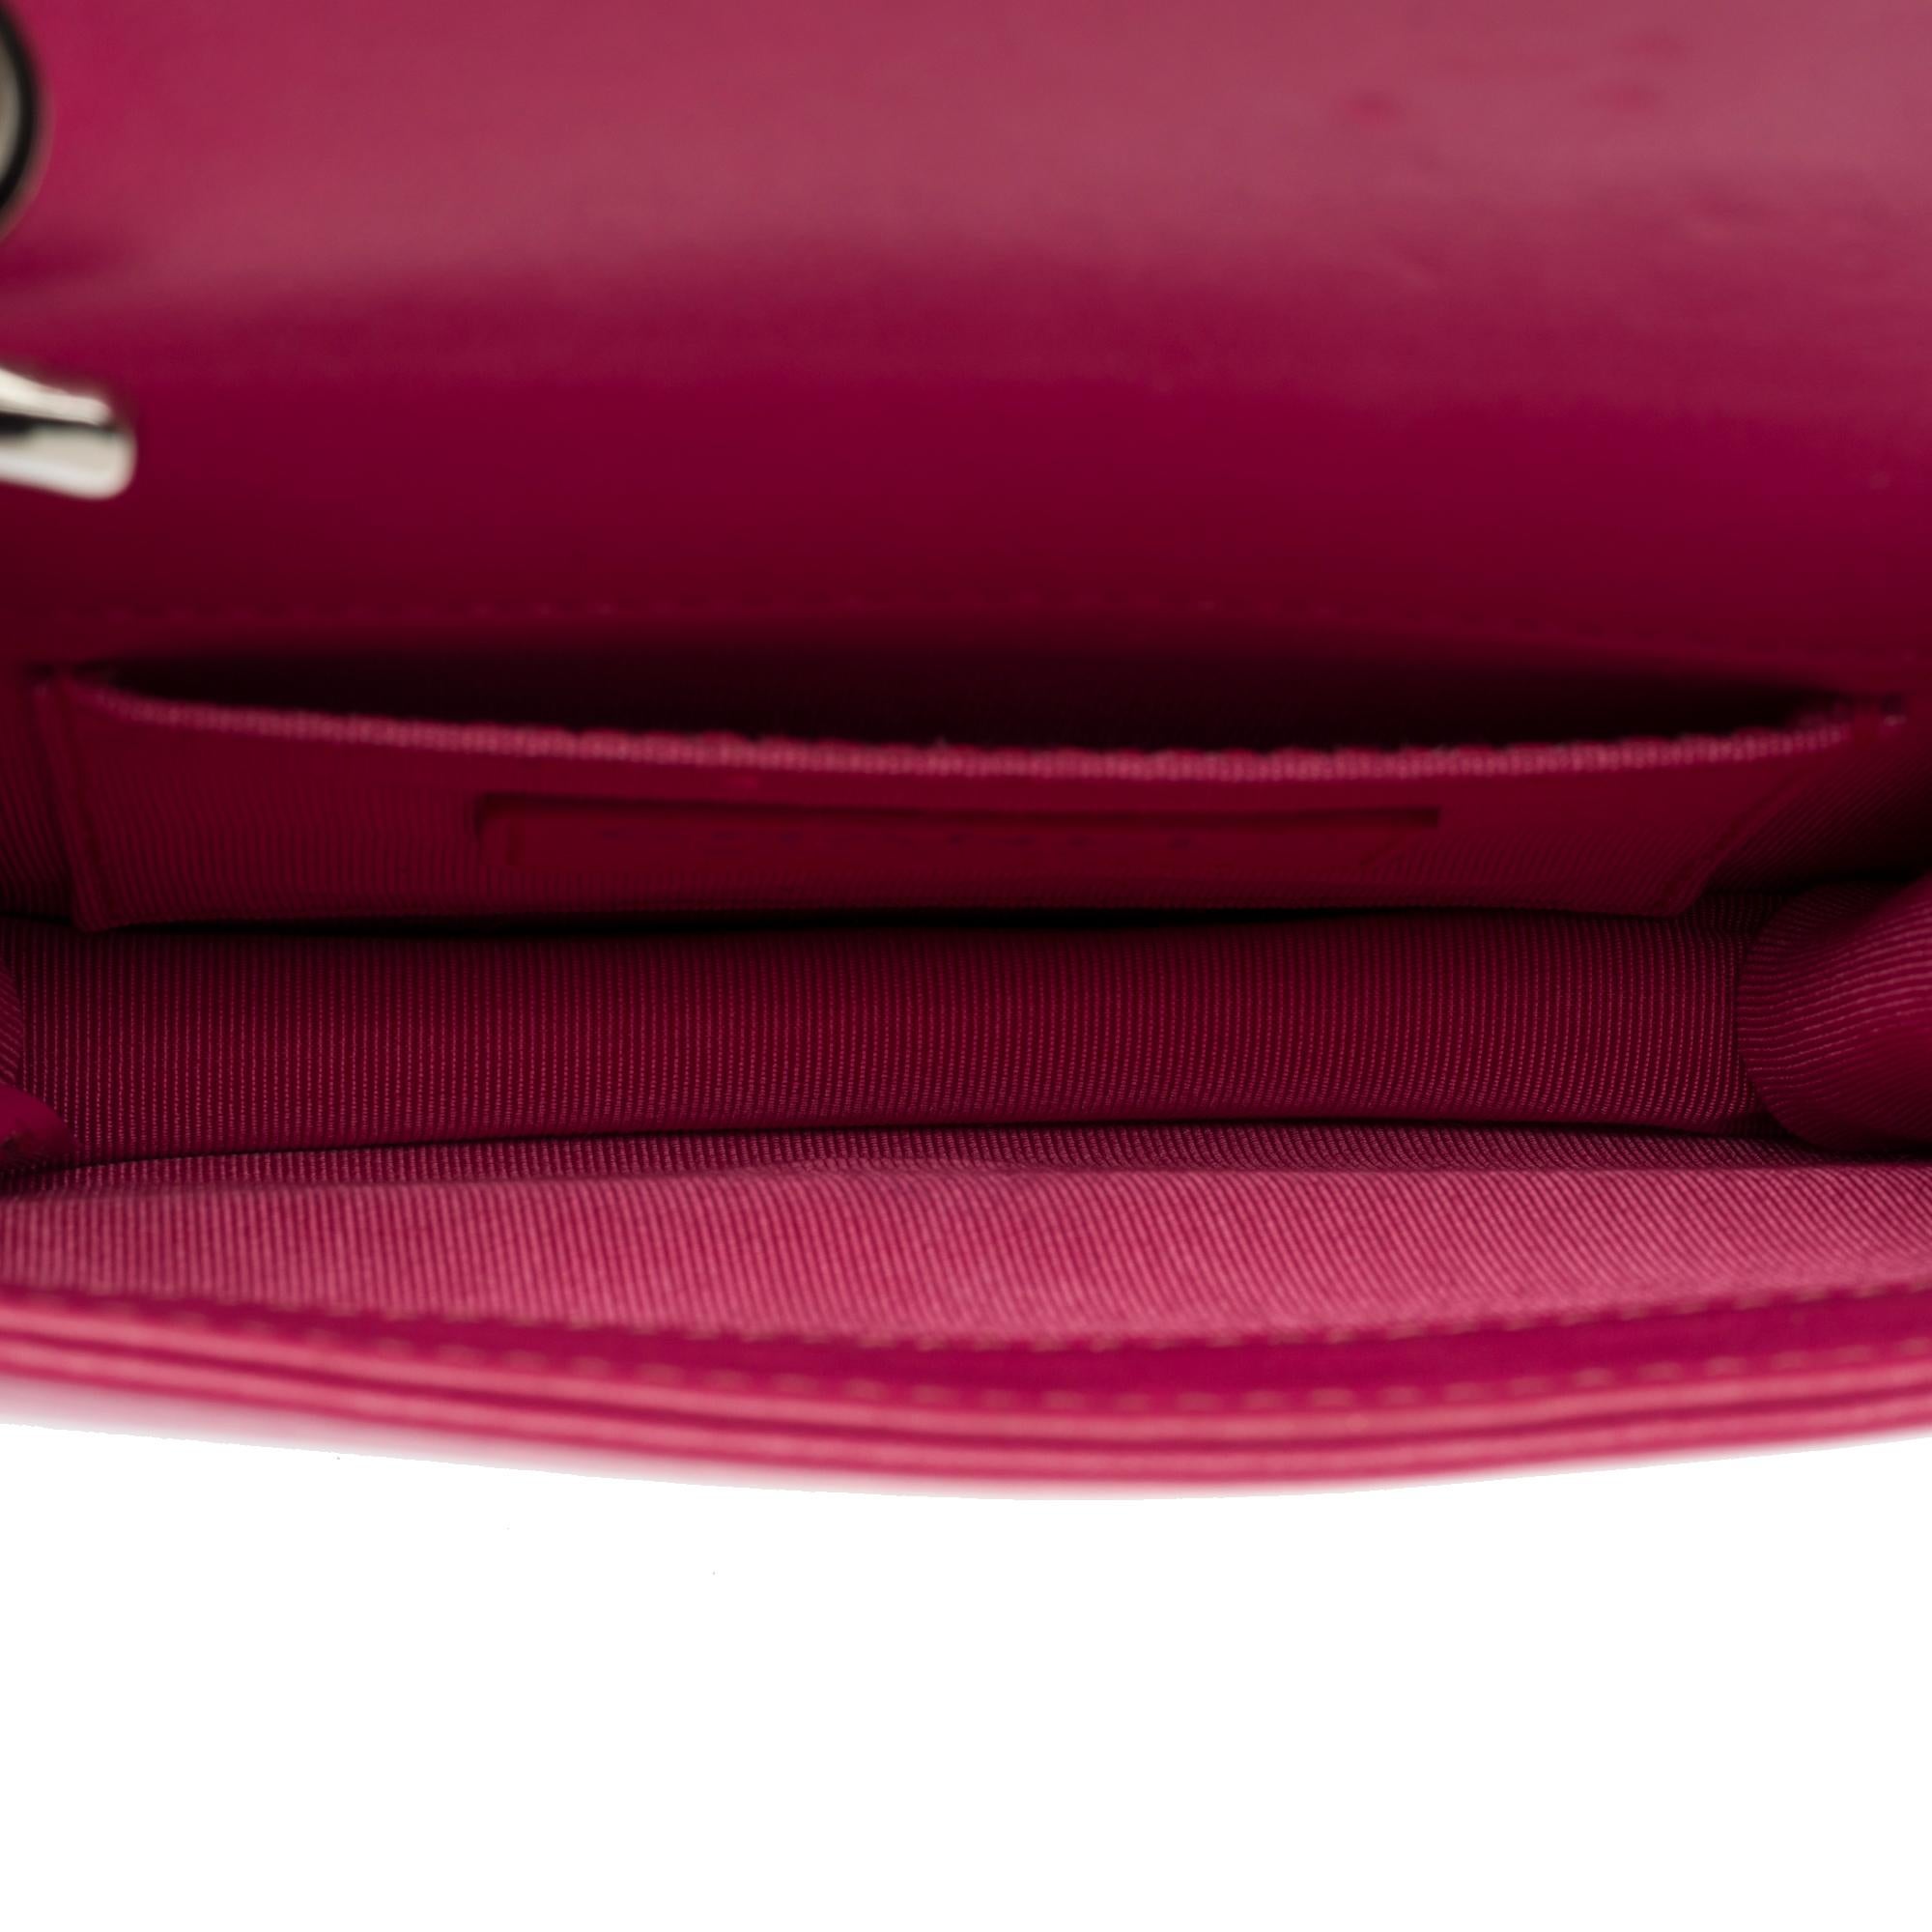 Women's Limited edition Chanel Mini shoulder flap bag lego in Pink & Orange leather, SHW